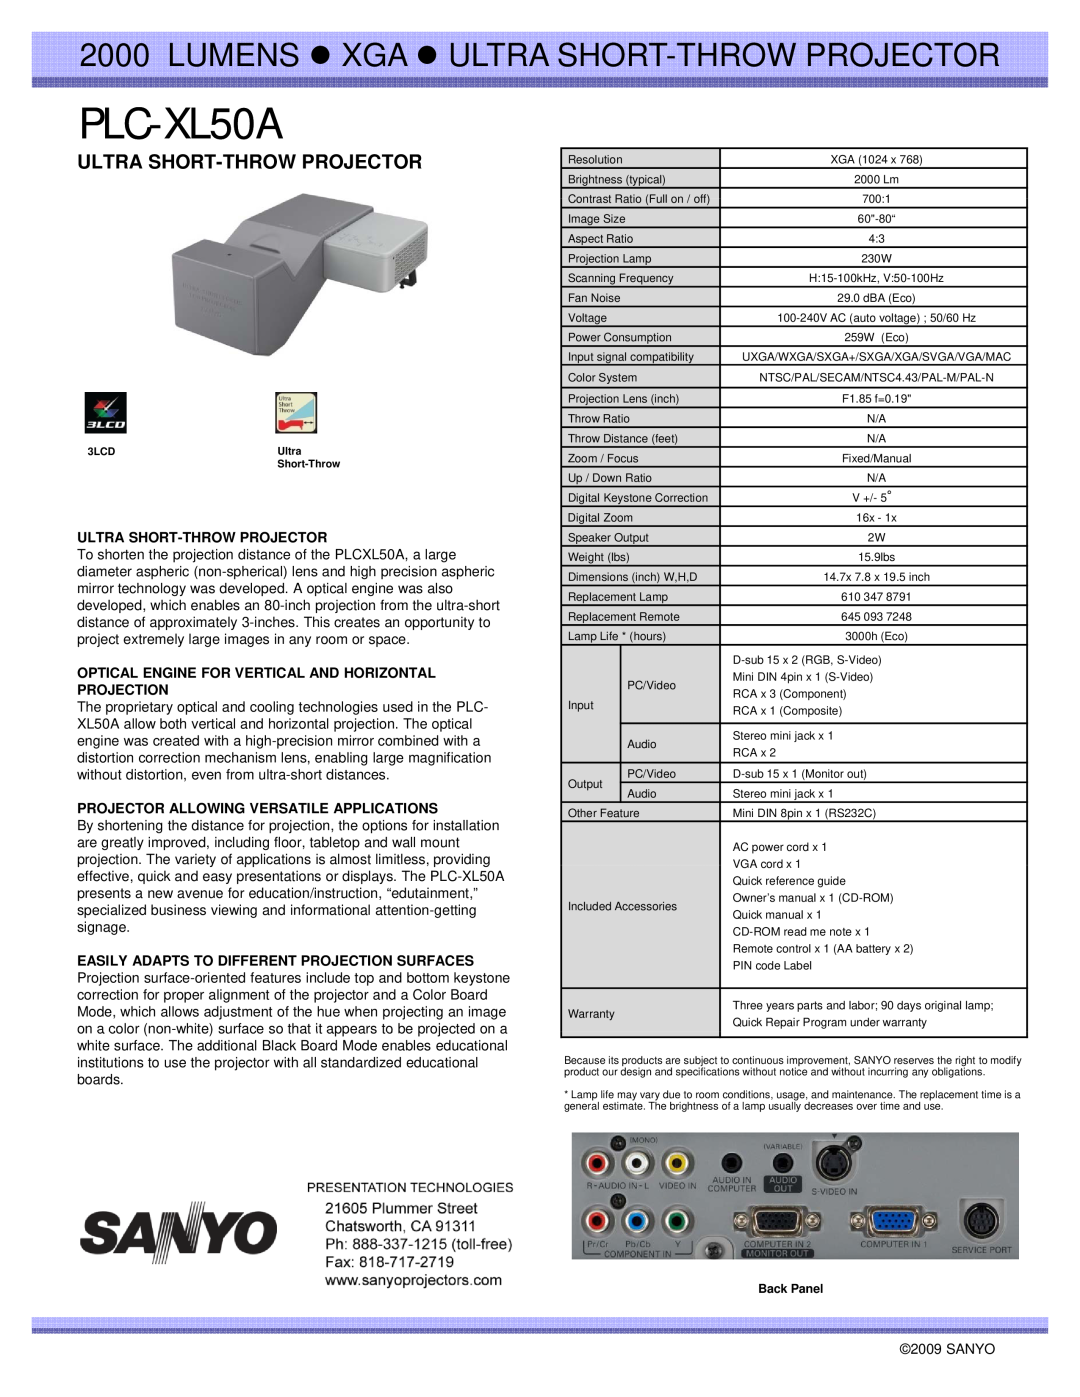 Sanyo PLC--XL50A dimensions PLC-XL50A, LUMENS z XGA z ULTRA SHORT-THROWPROJECTOR, Ultra Short-Throwprojector, Projection 